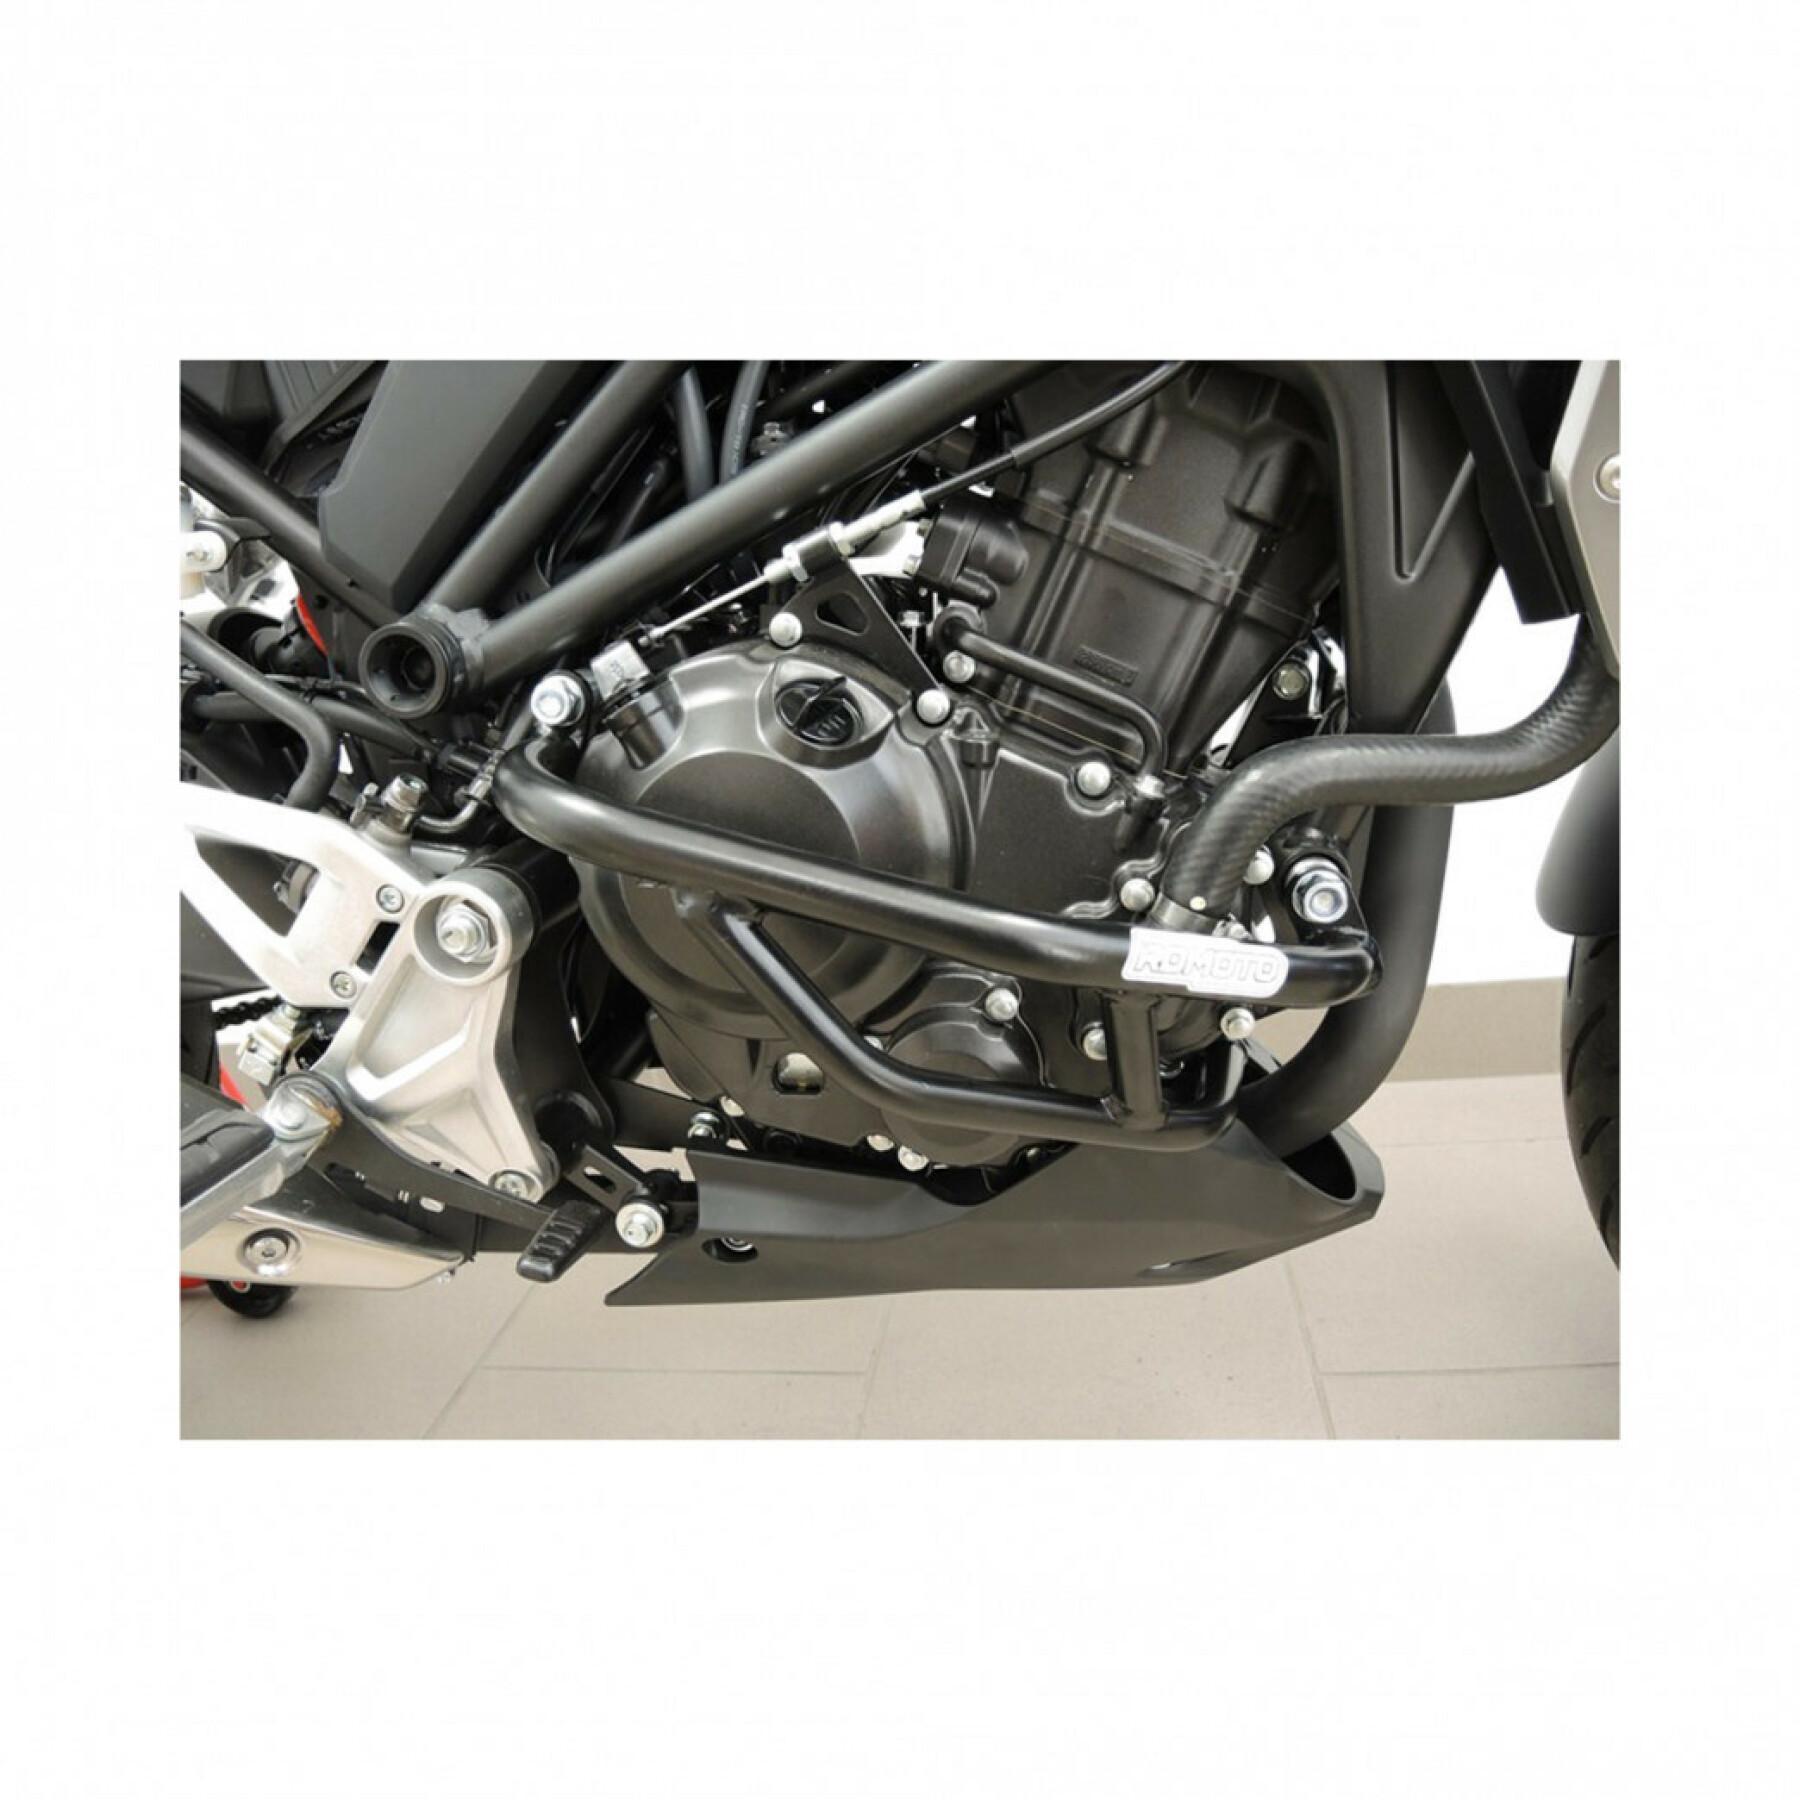 Motorcycle tank bag RD Moto Honda Cb300R '18 -'19